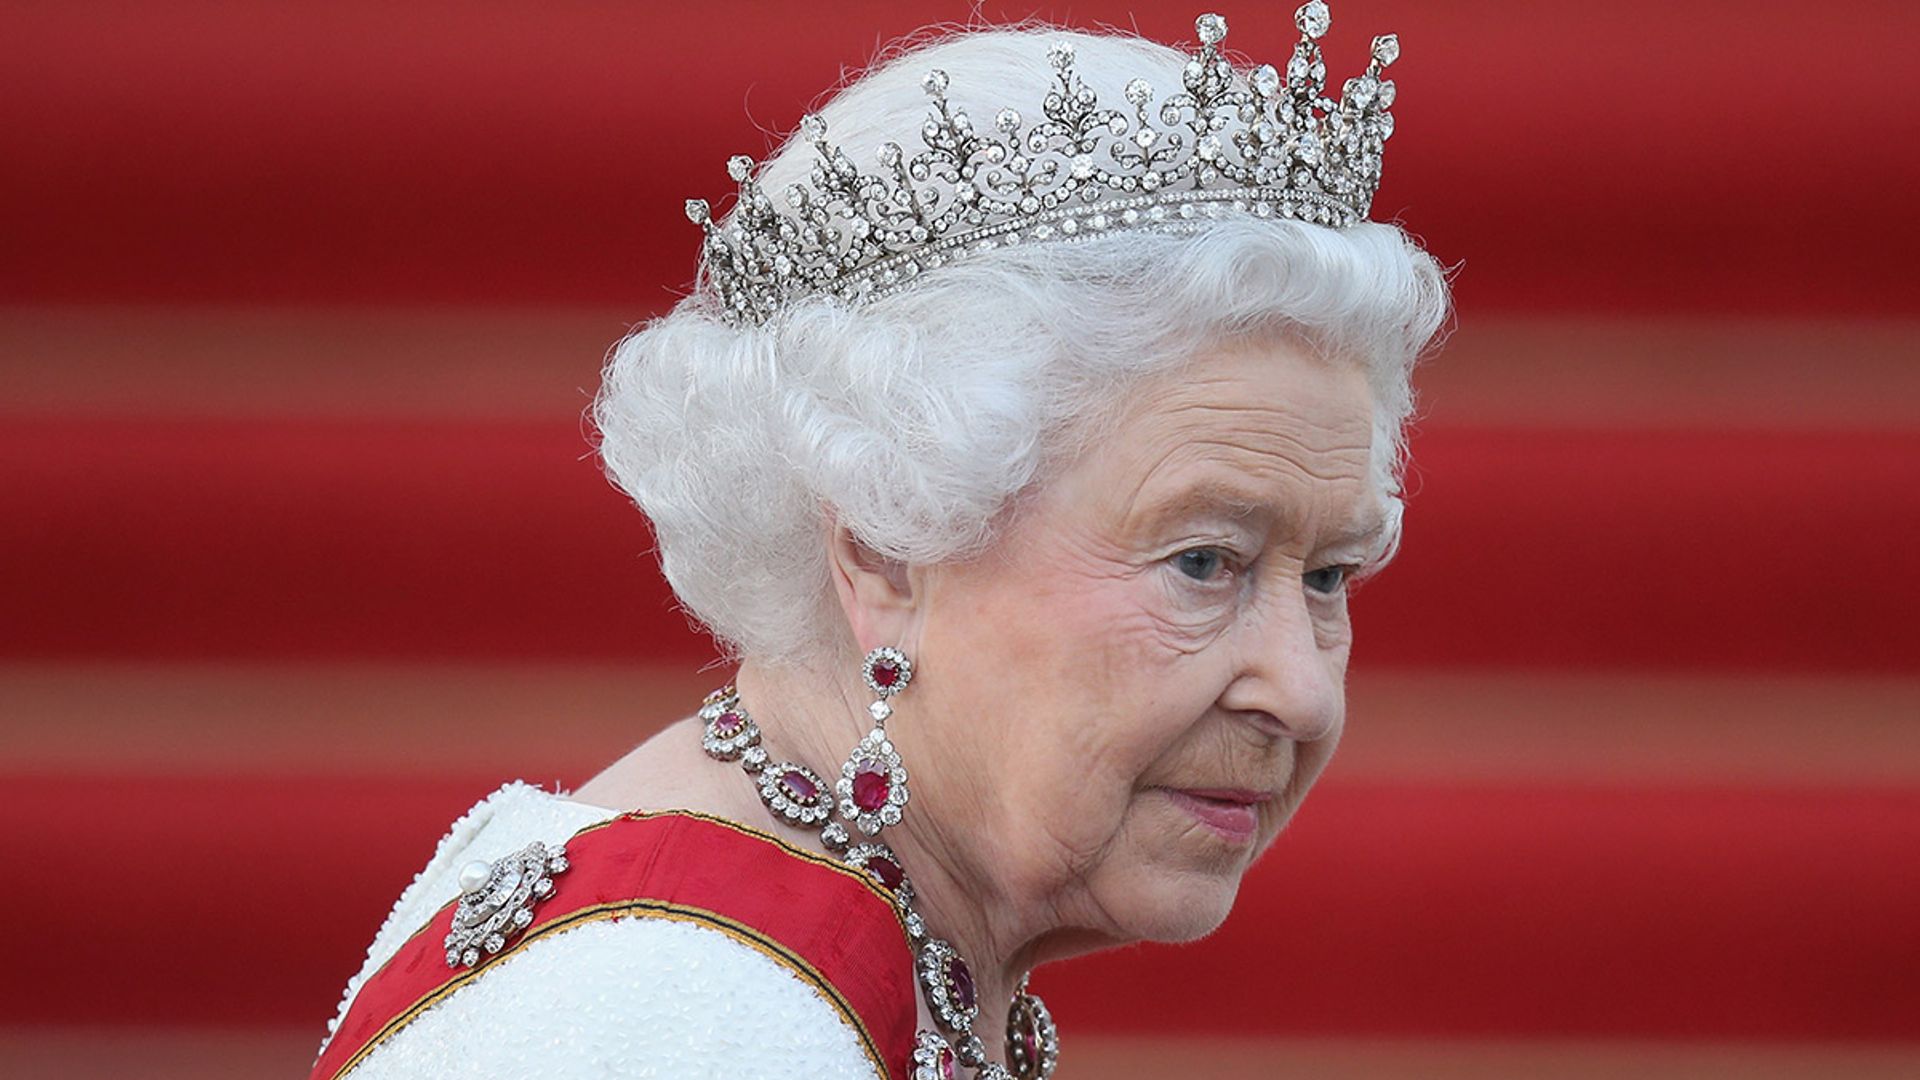 the queen wearing crown